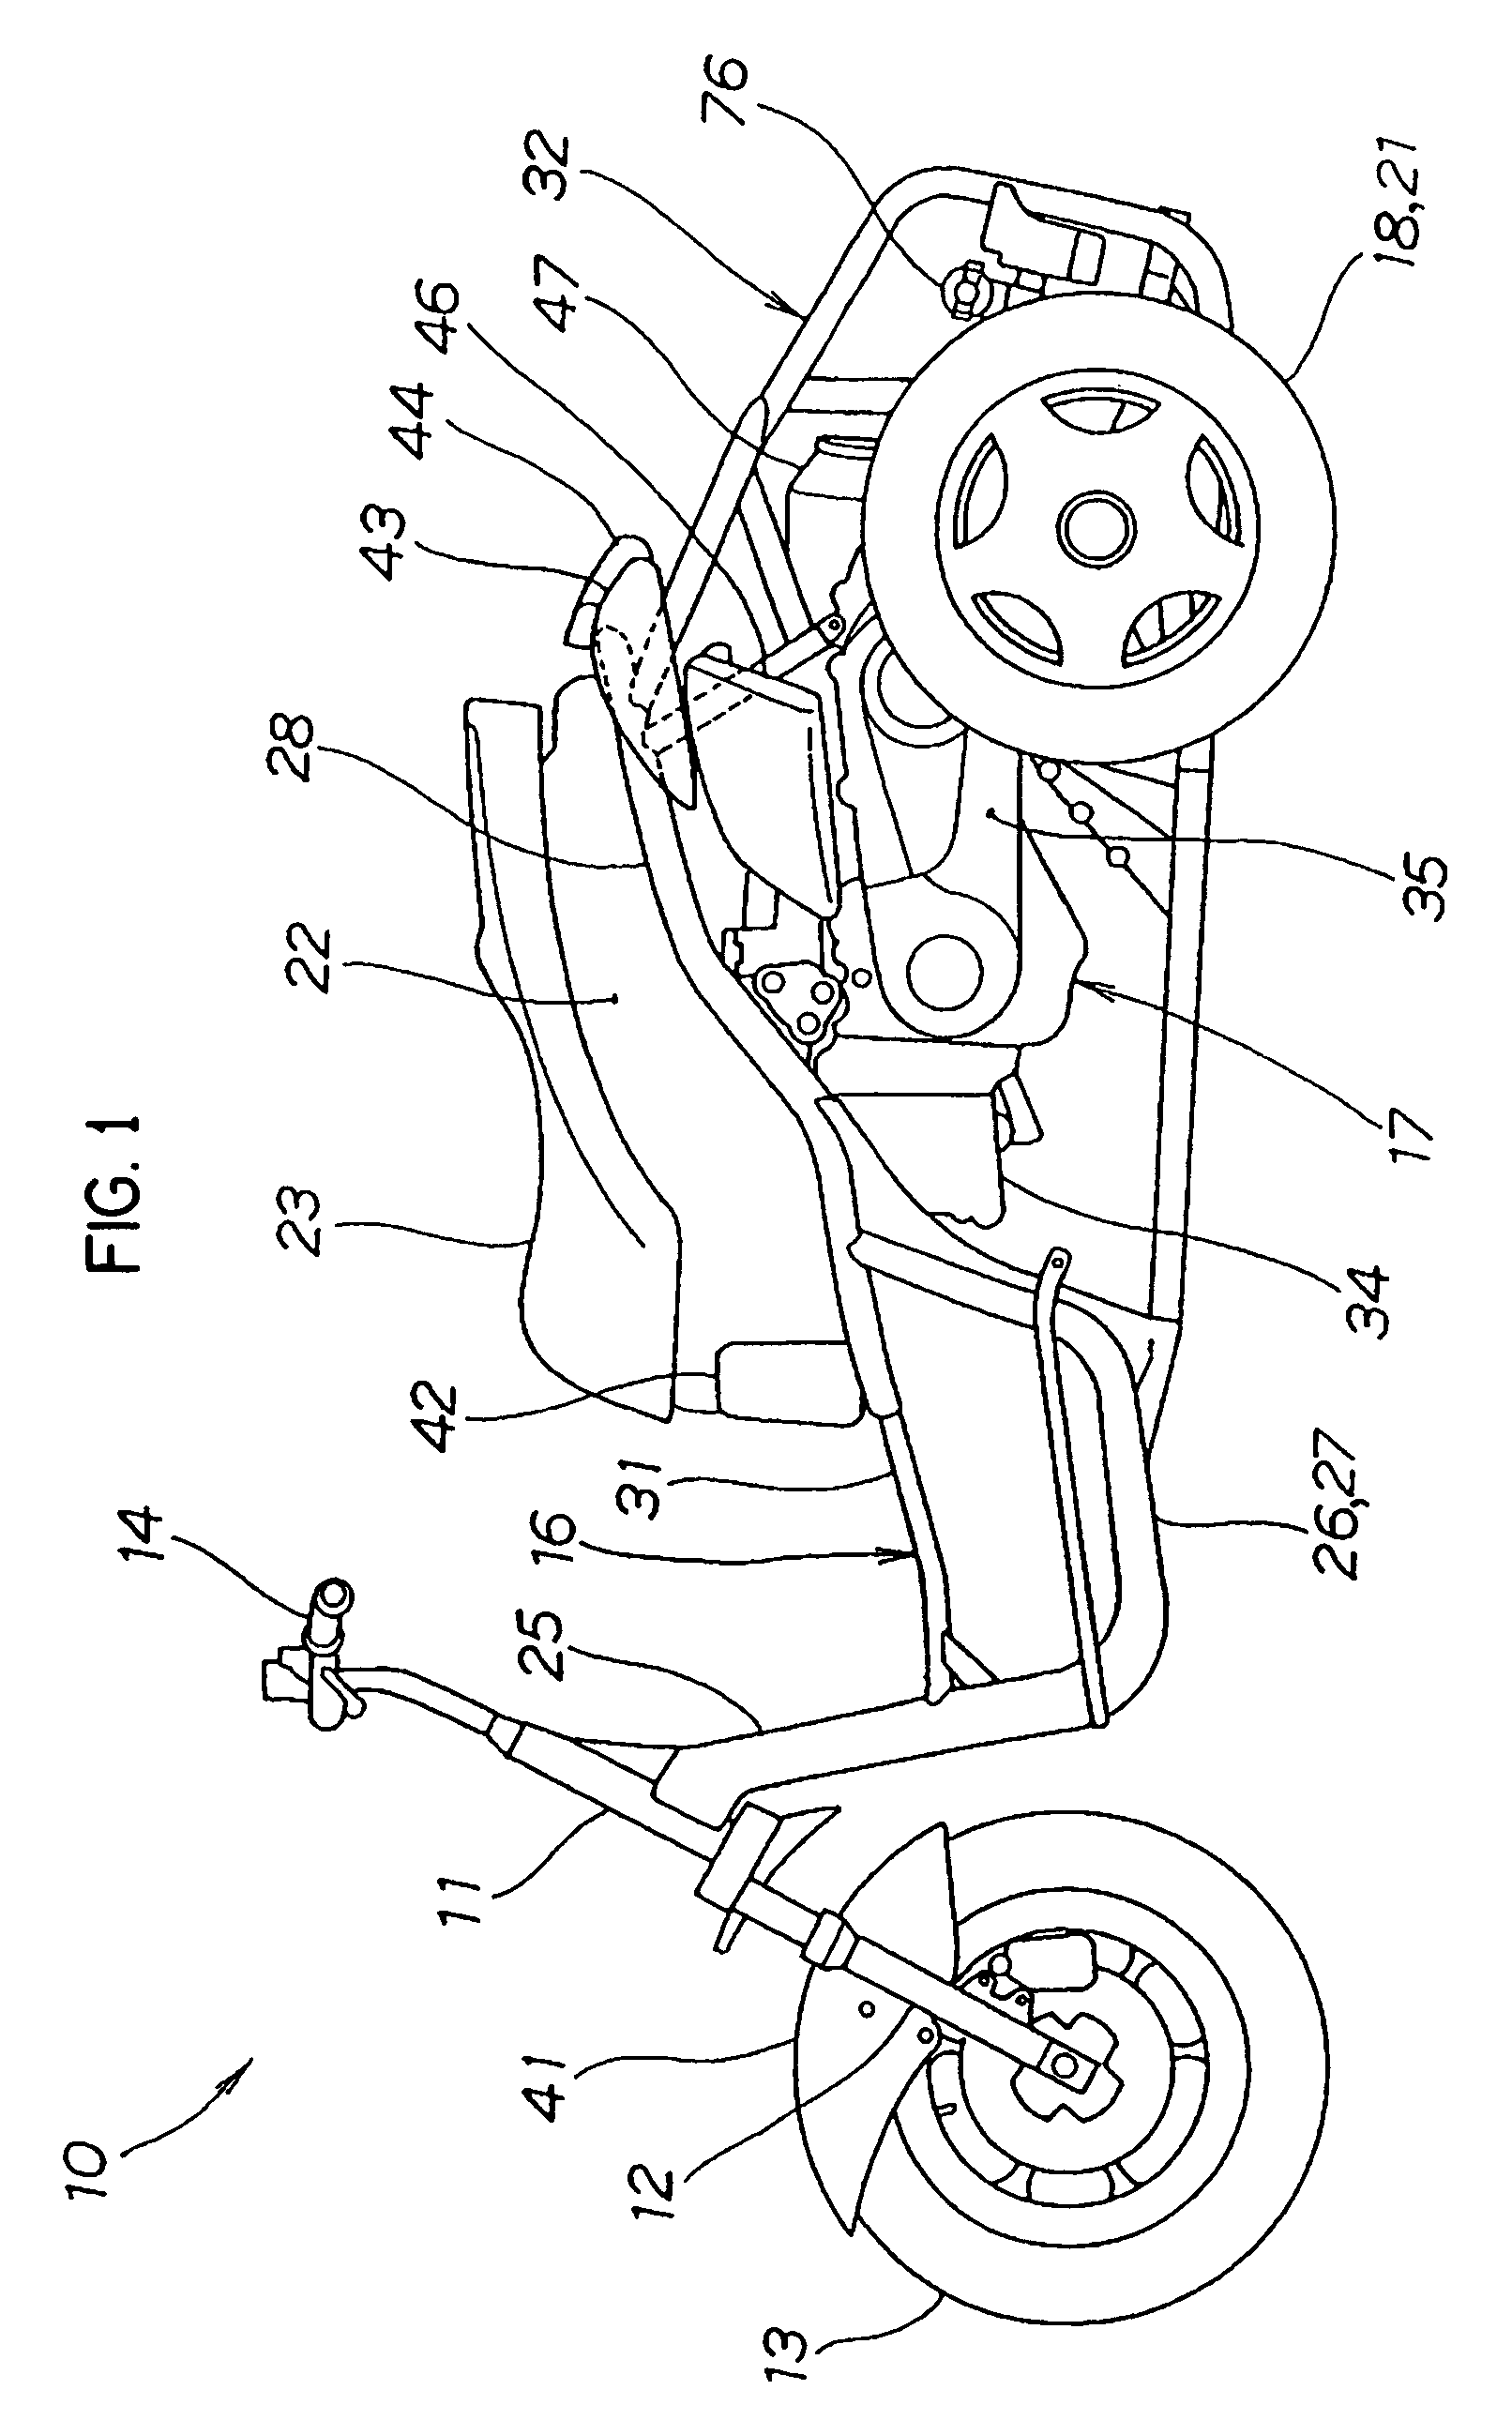 Three-wheel vehicle with swinging mechanism